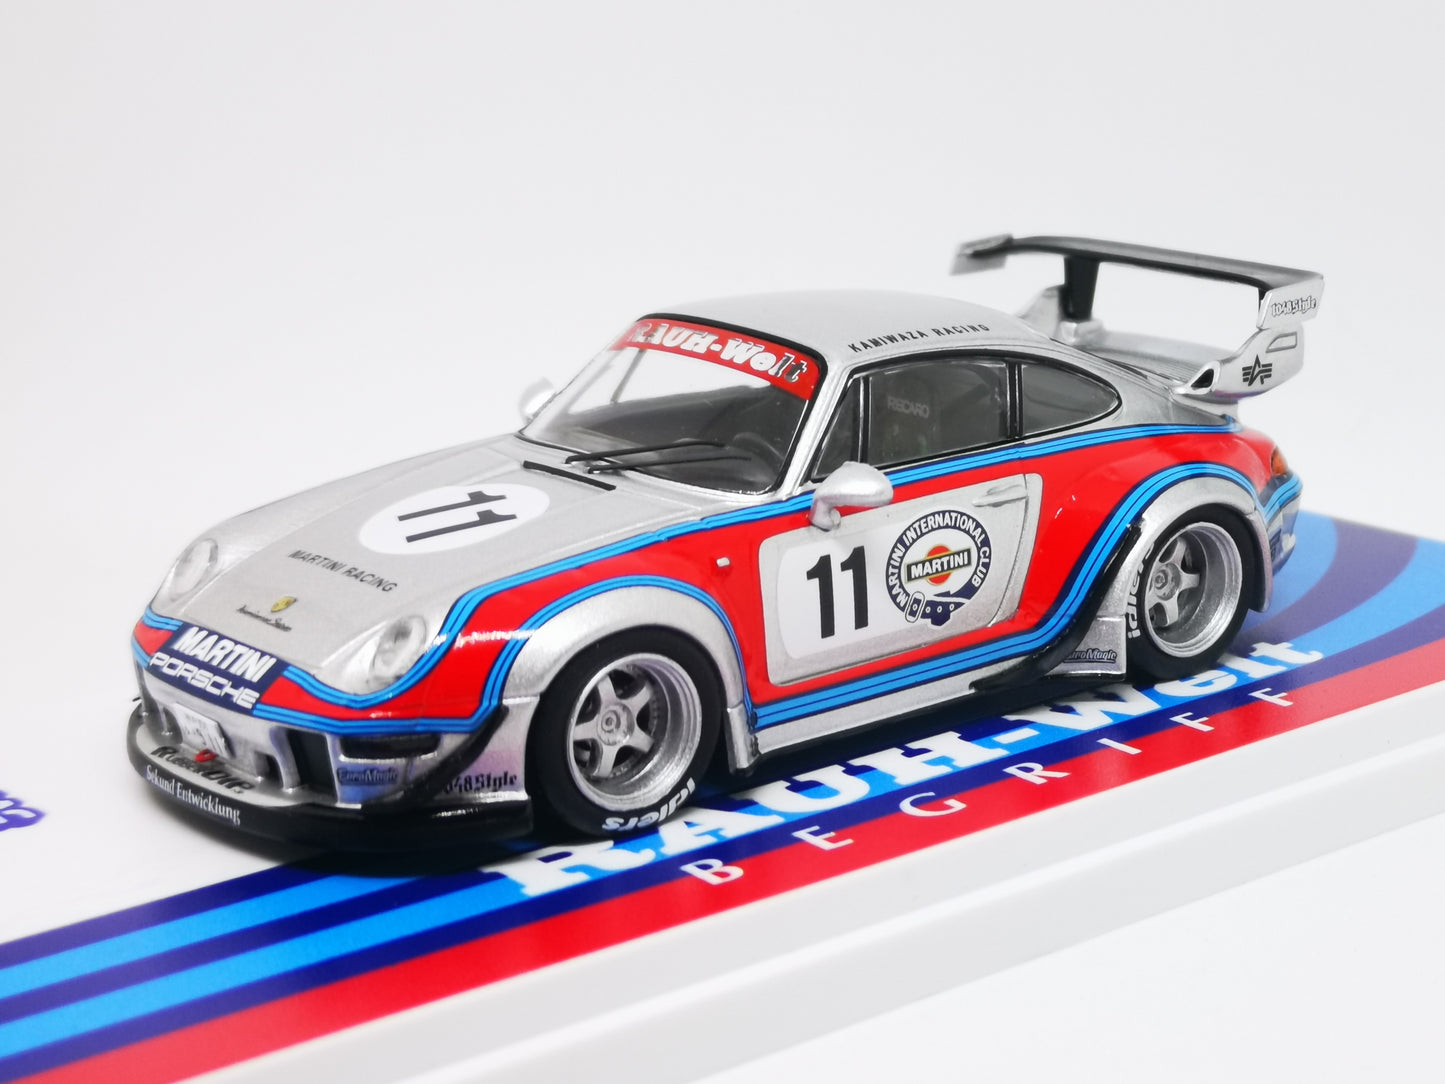 Tarmacworks Porsche 993 RWB Martini Rough Rhythm #11 1:43 Scale